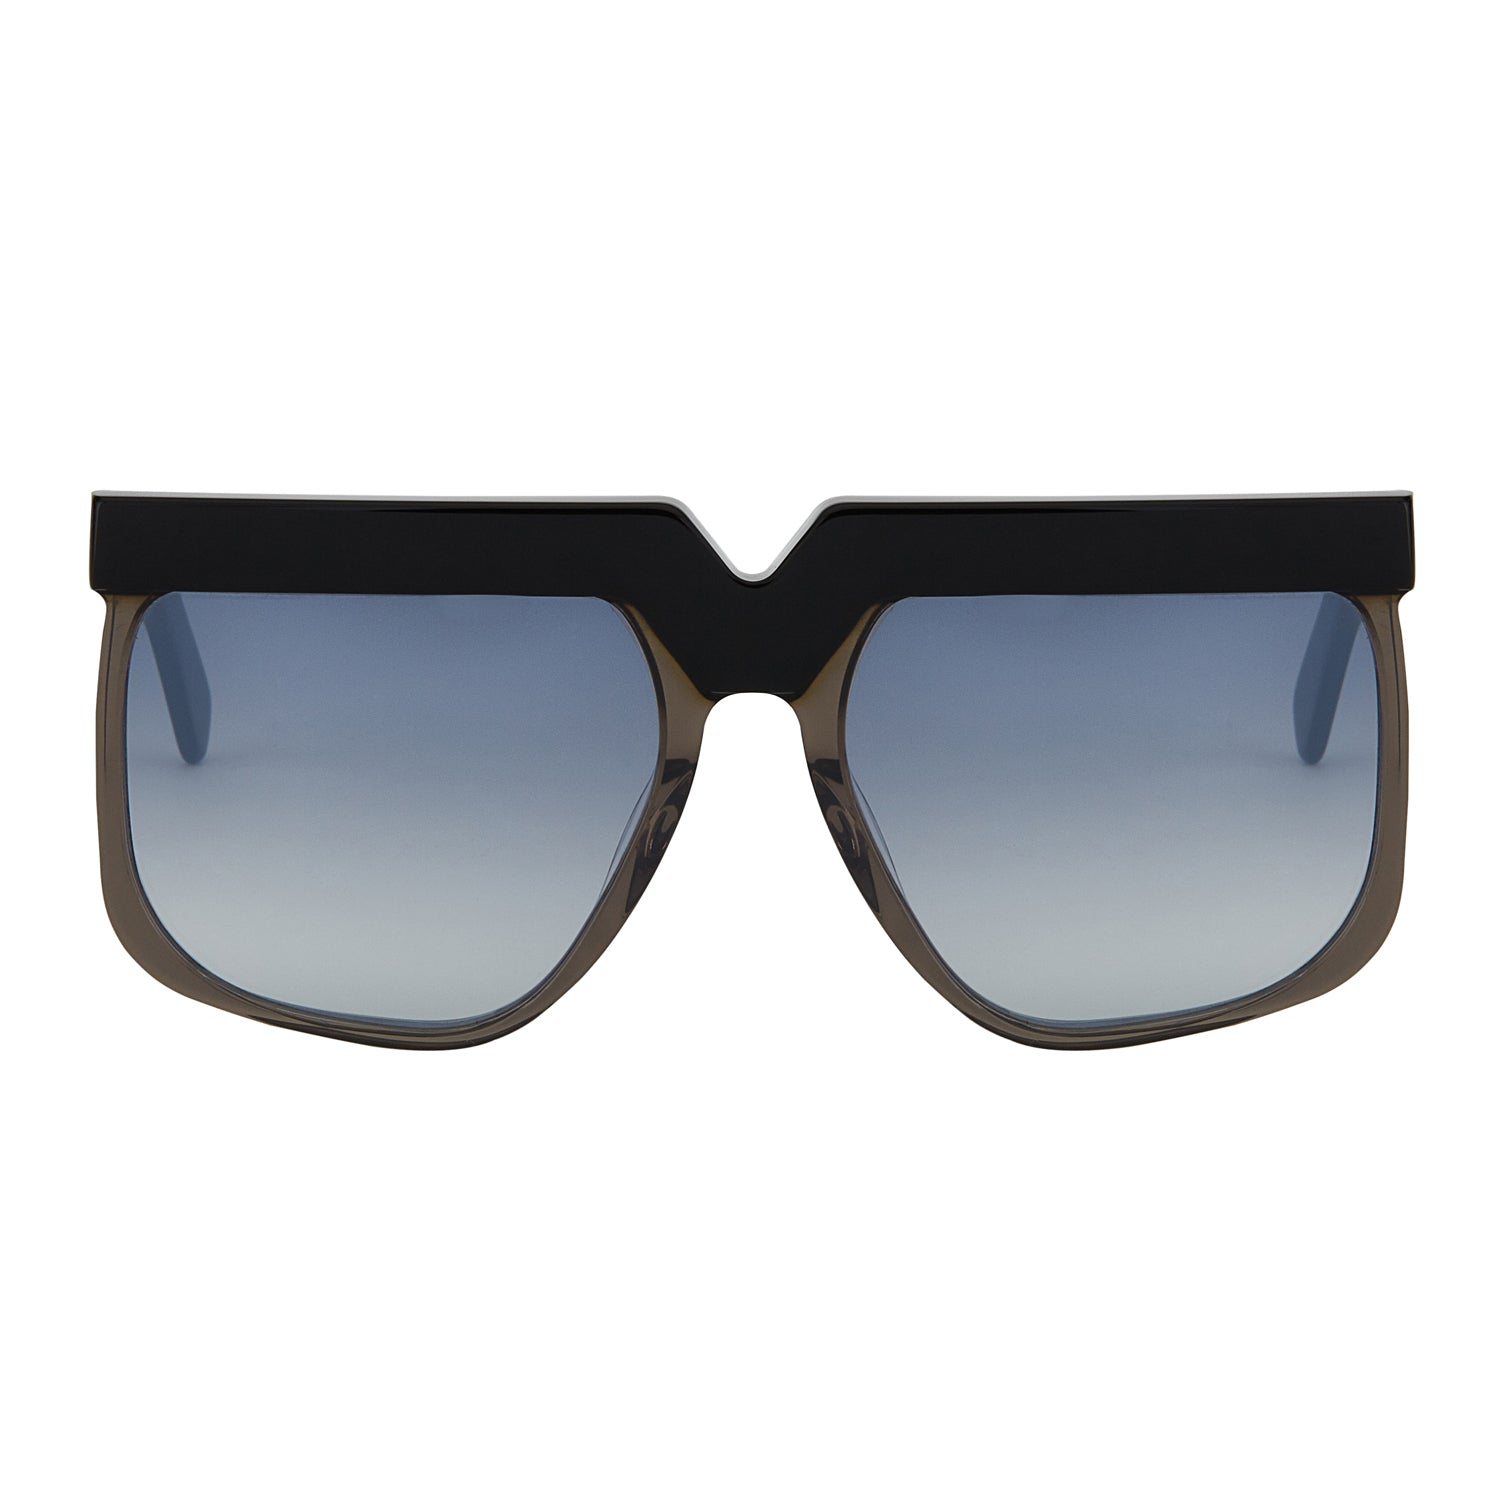 Mokki Big Brows sunglasses in black